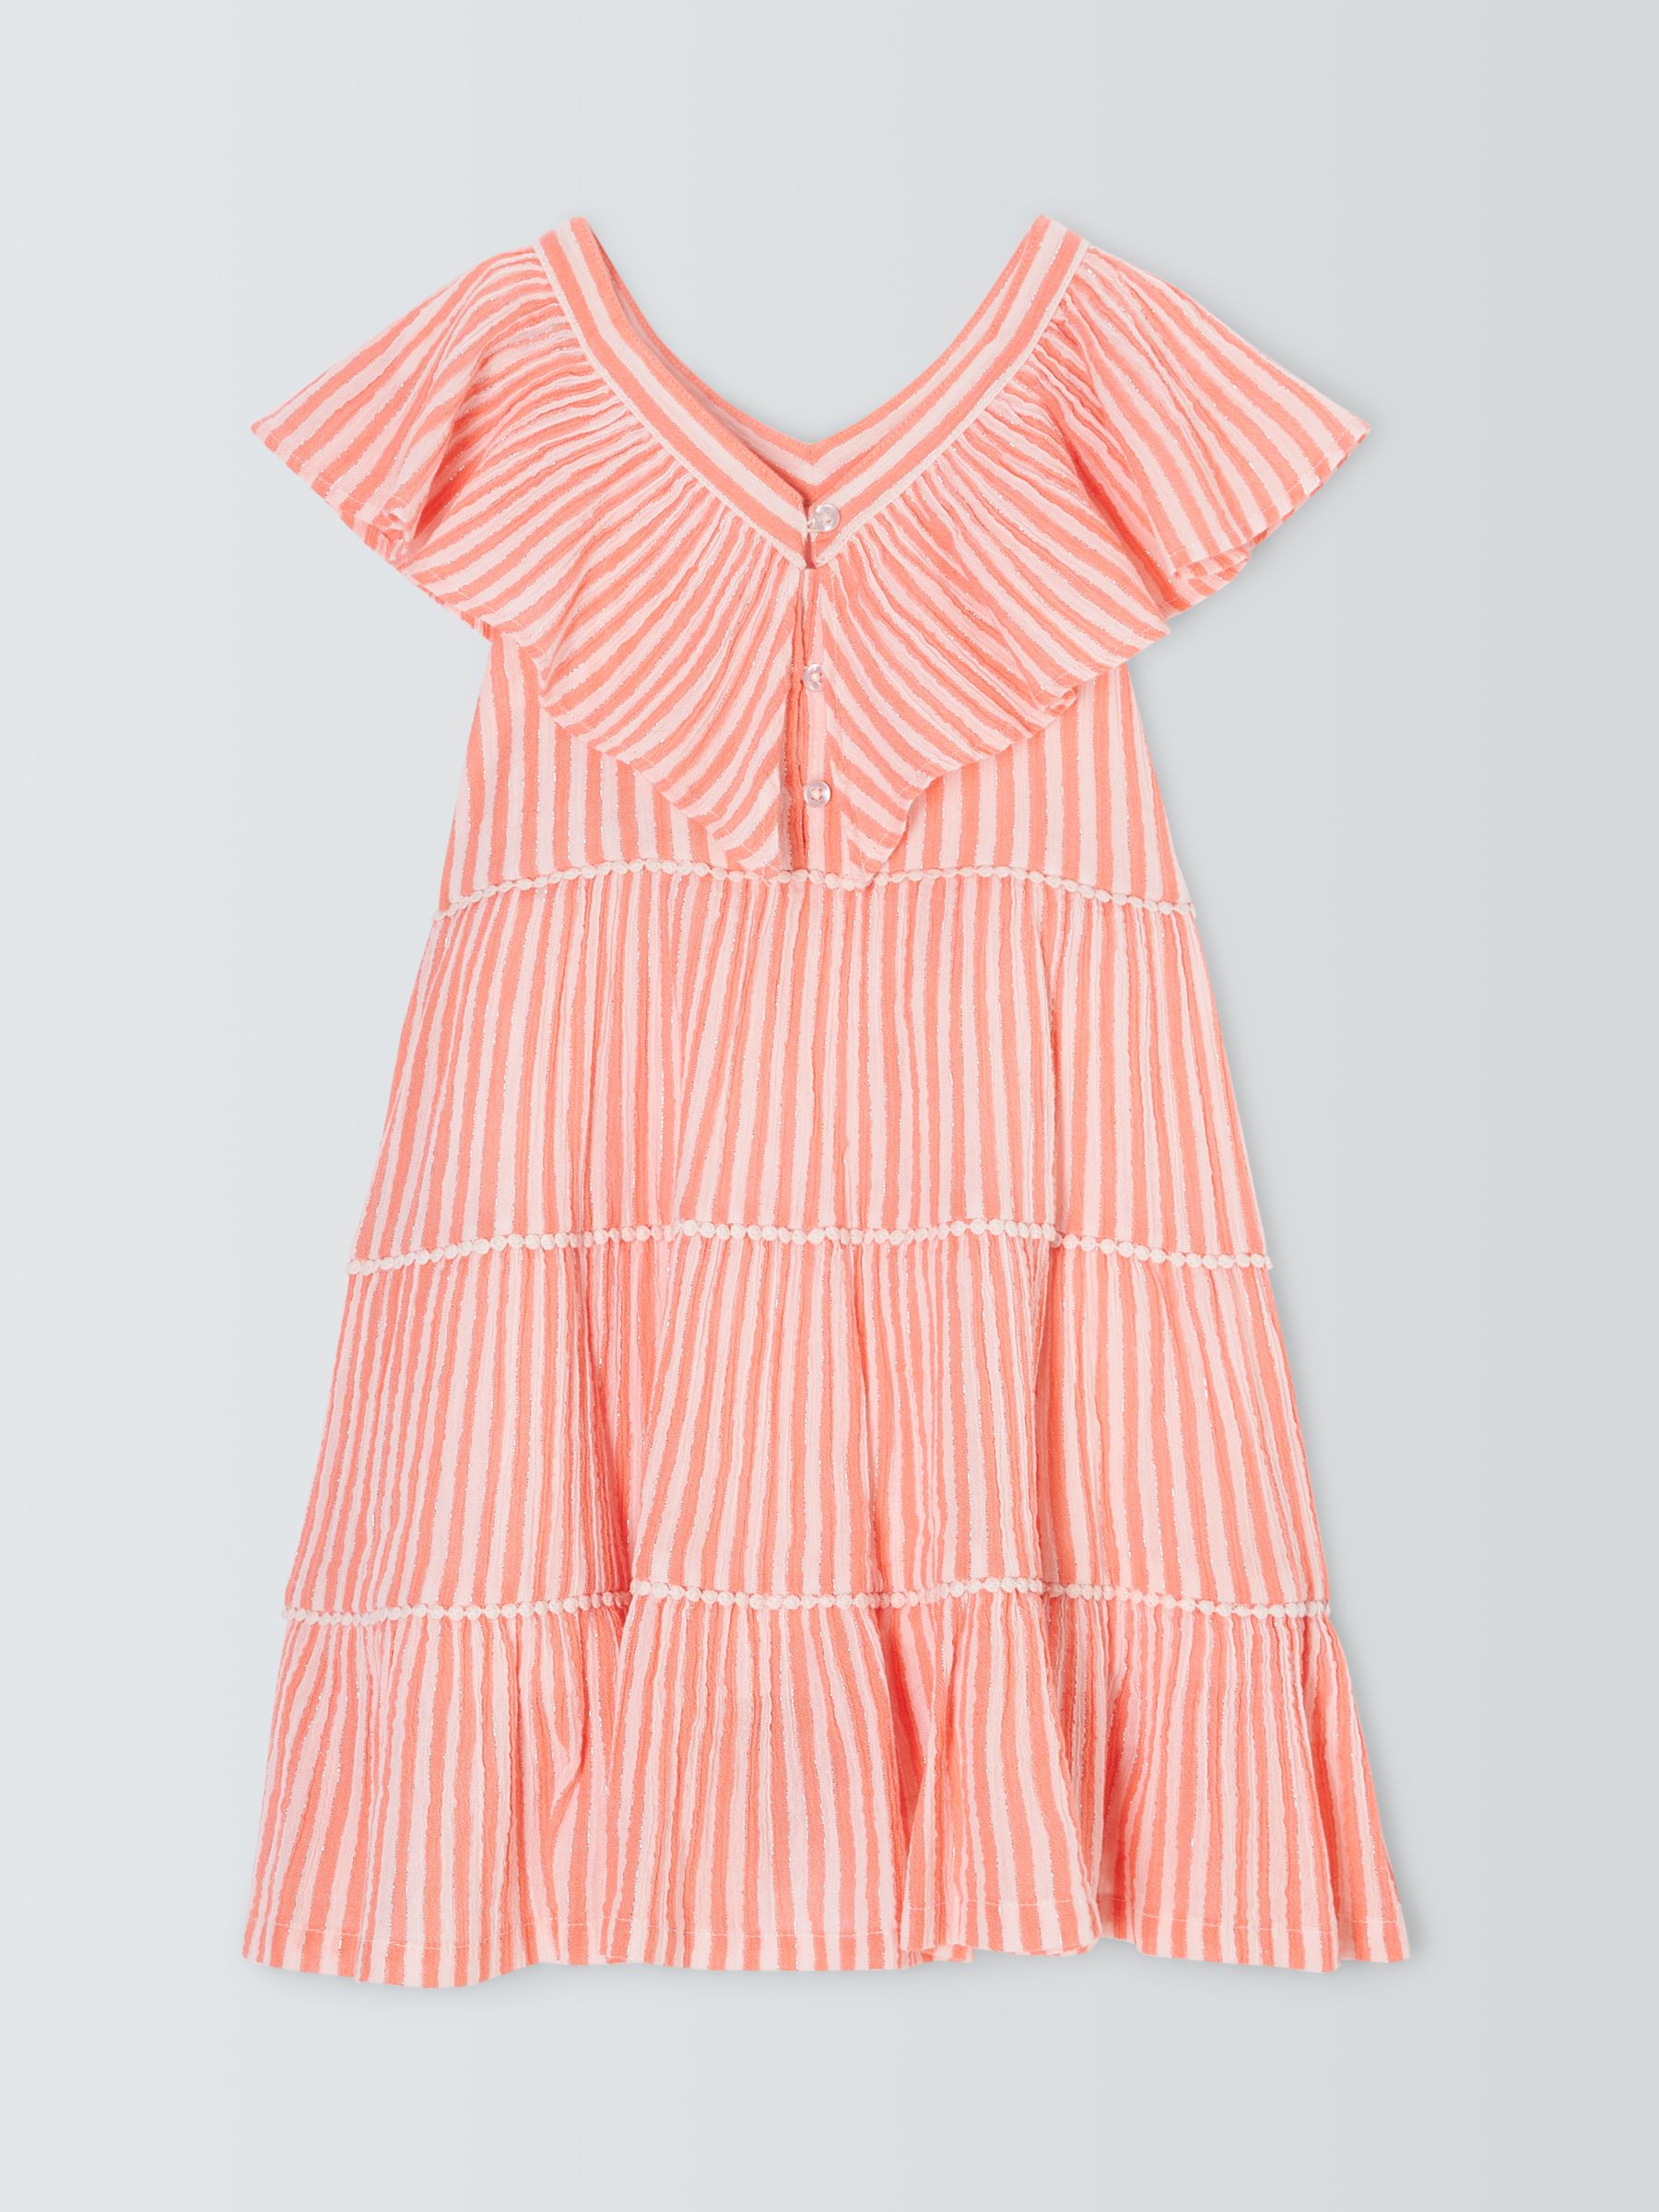 John Lewis Kids' Metallic Stripe Tiered Dress, White/Peach, 3 years